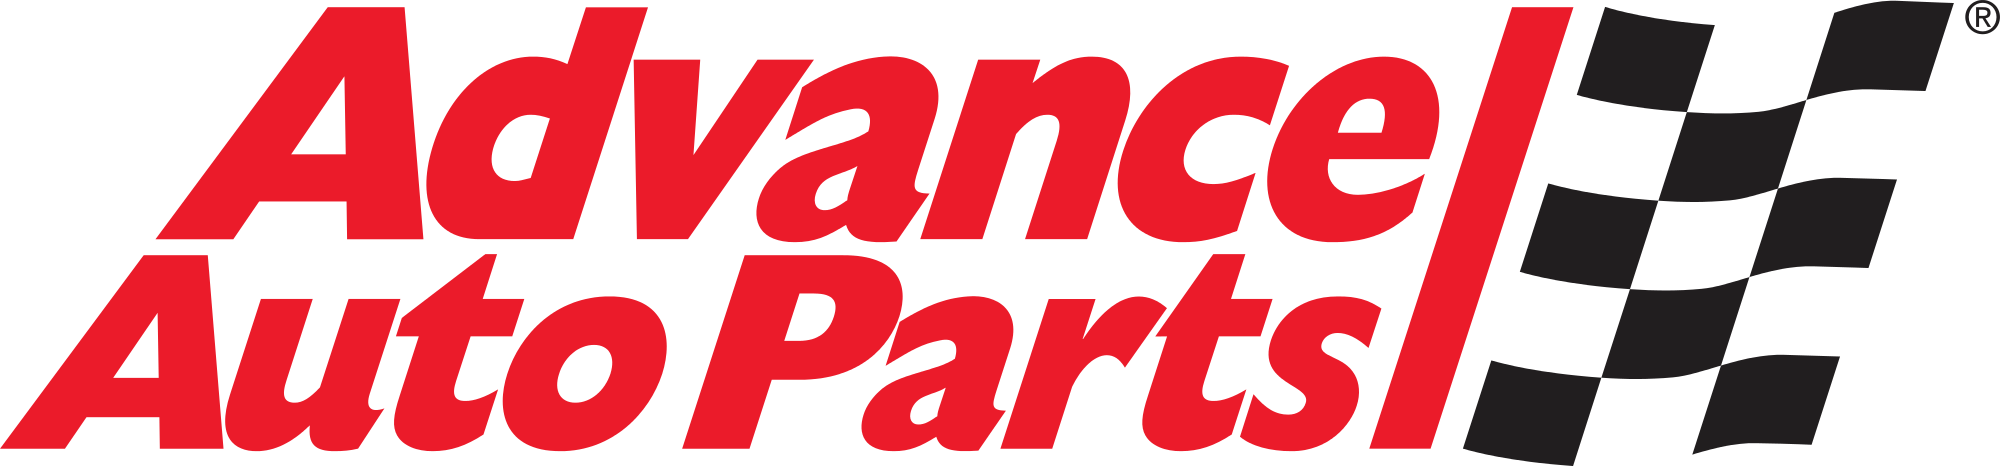 Advance Auto Parts Logo Png Png Image Collection